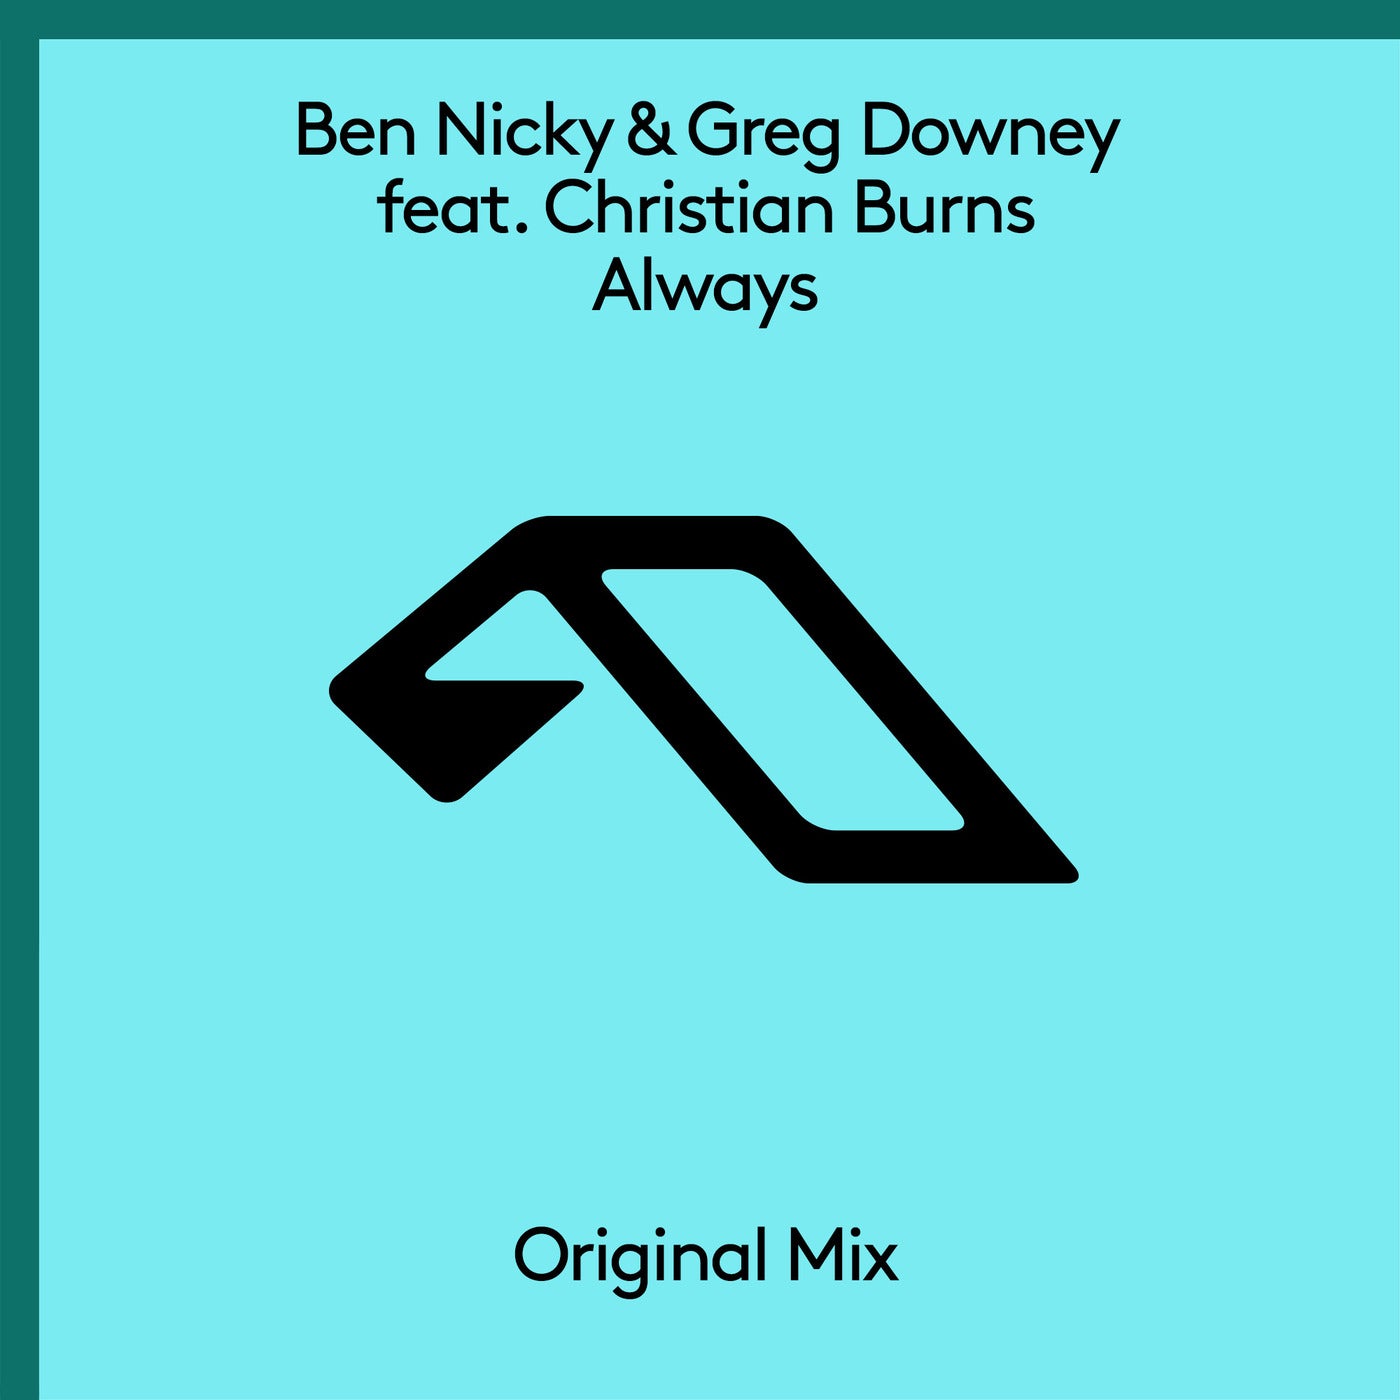 Ben Nicky & Greg Downey featuring Christian Burns — Always cover artwork